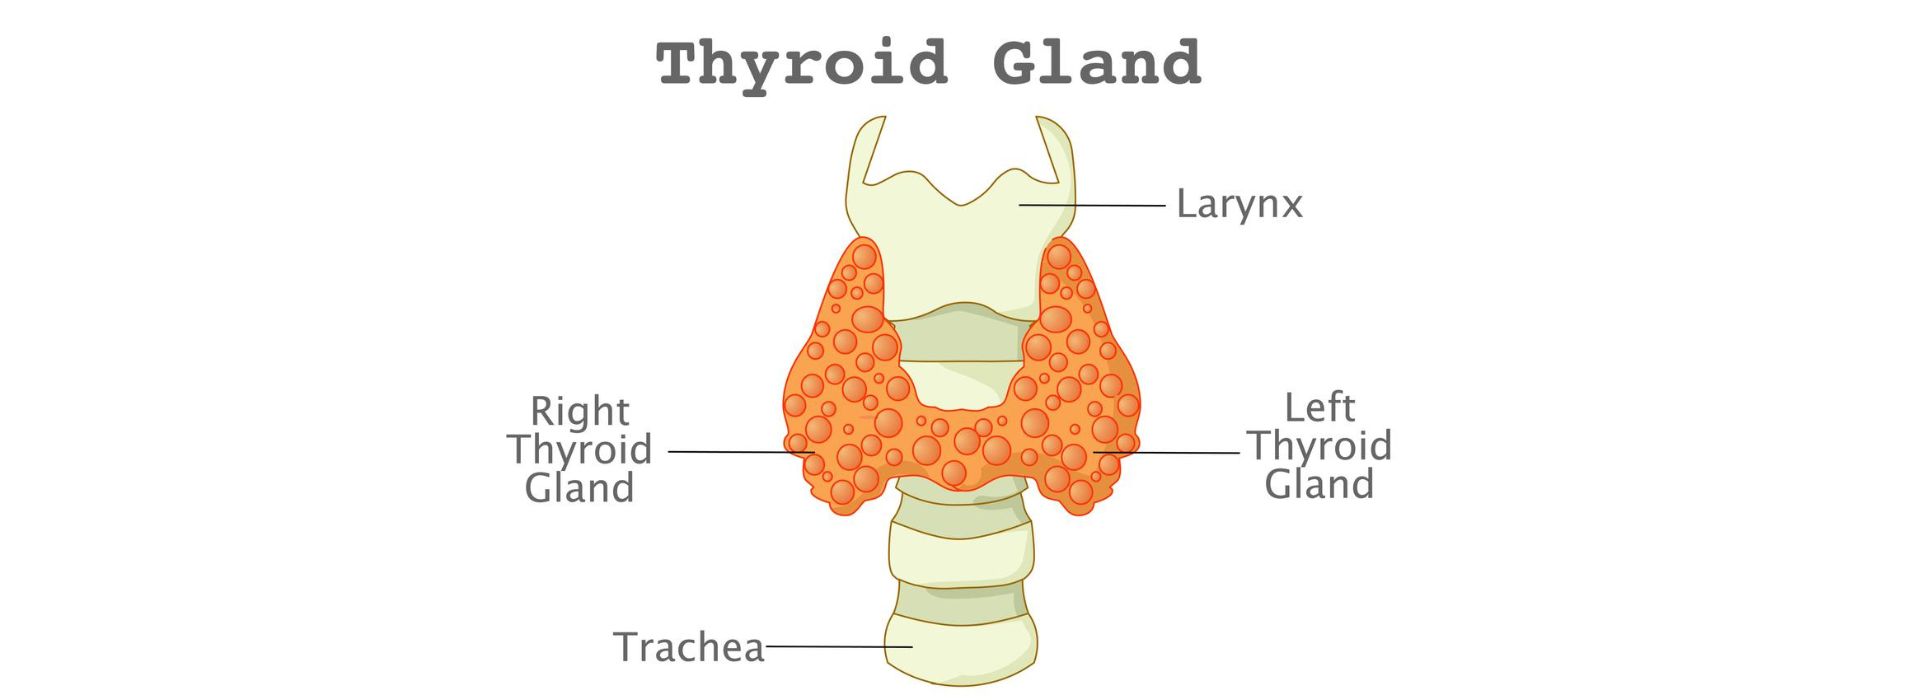 Thyroid gland functions 